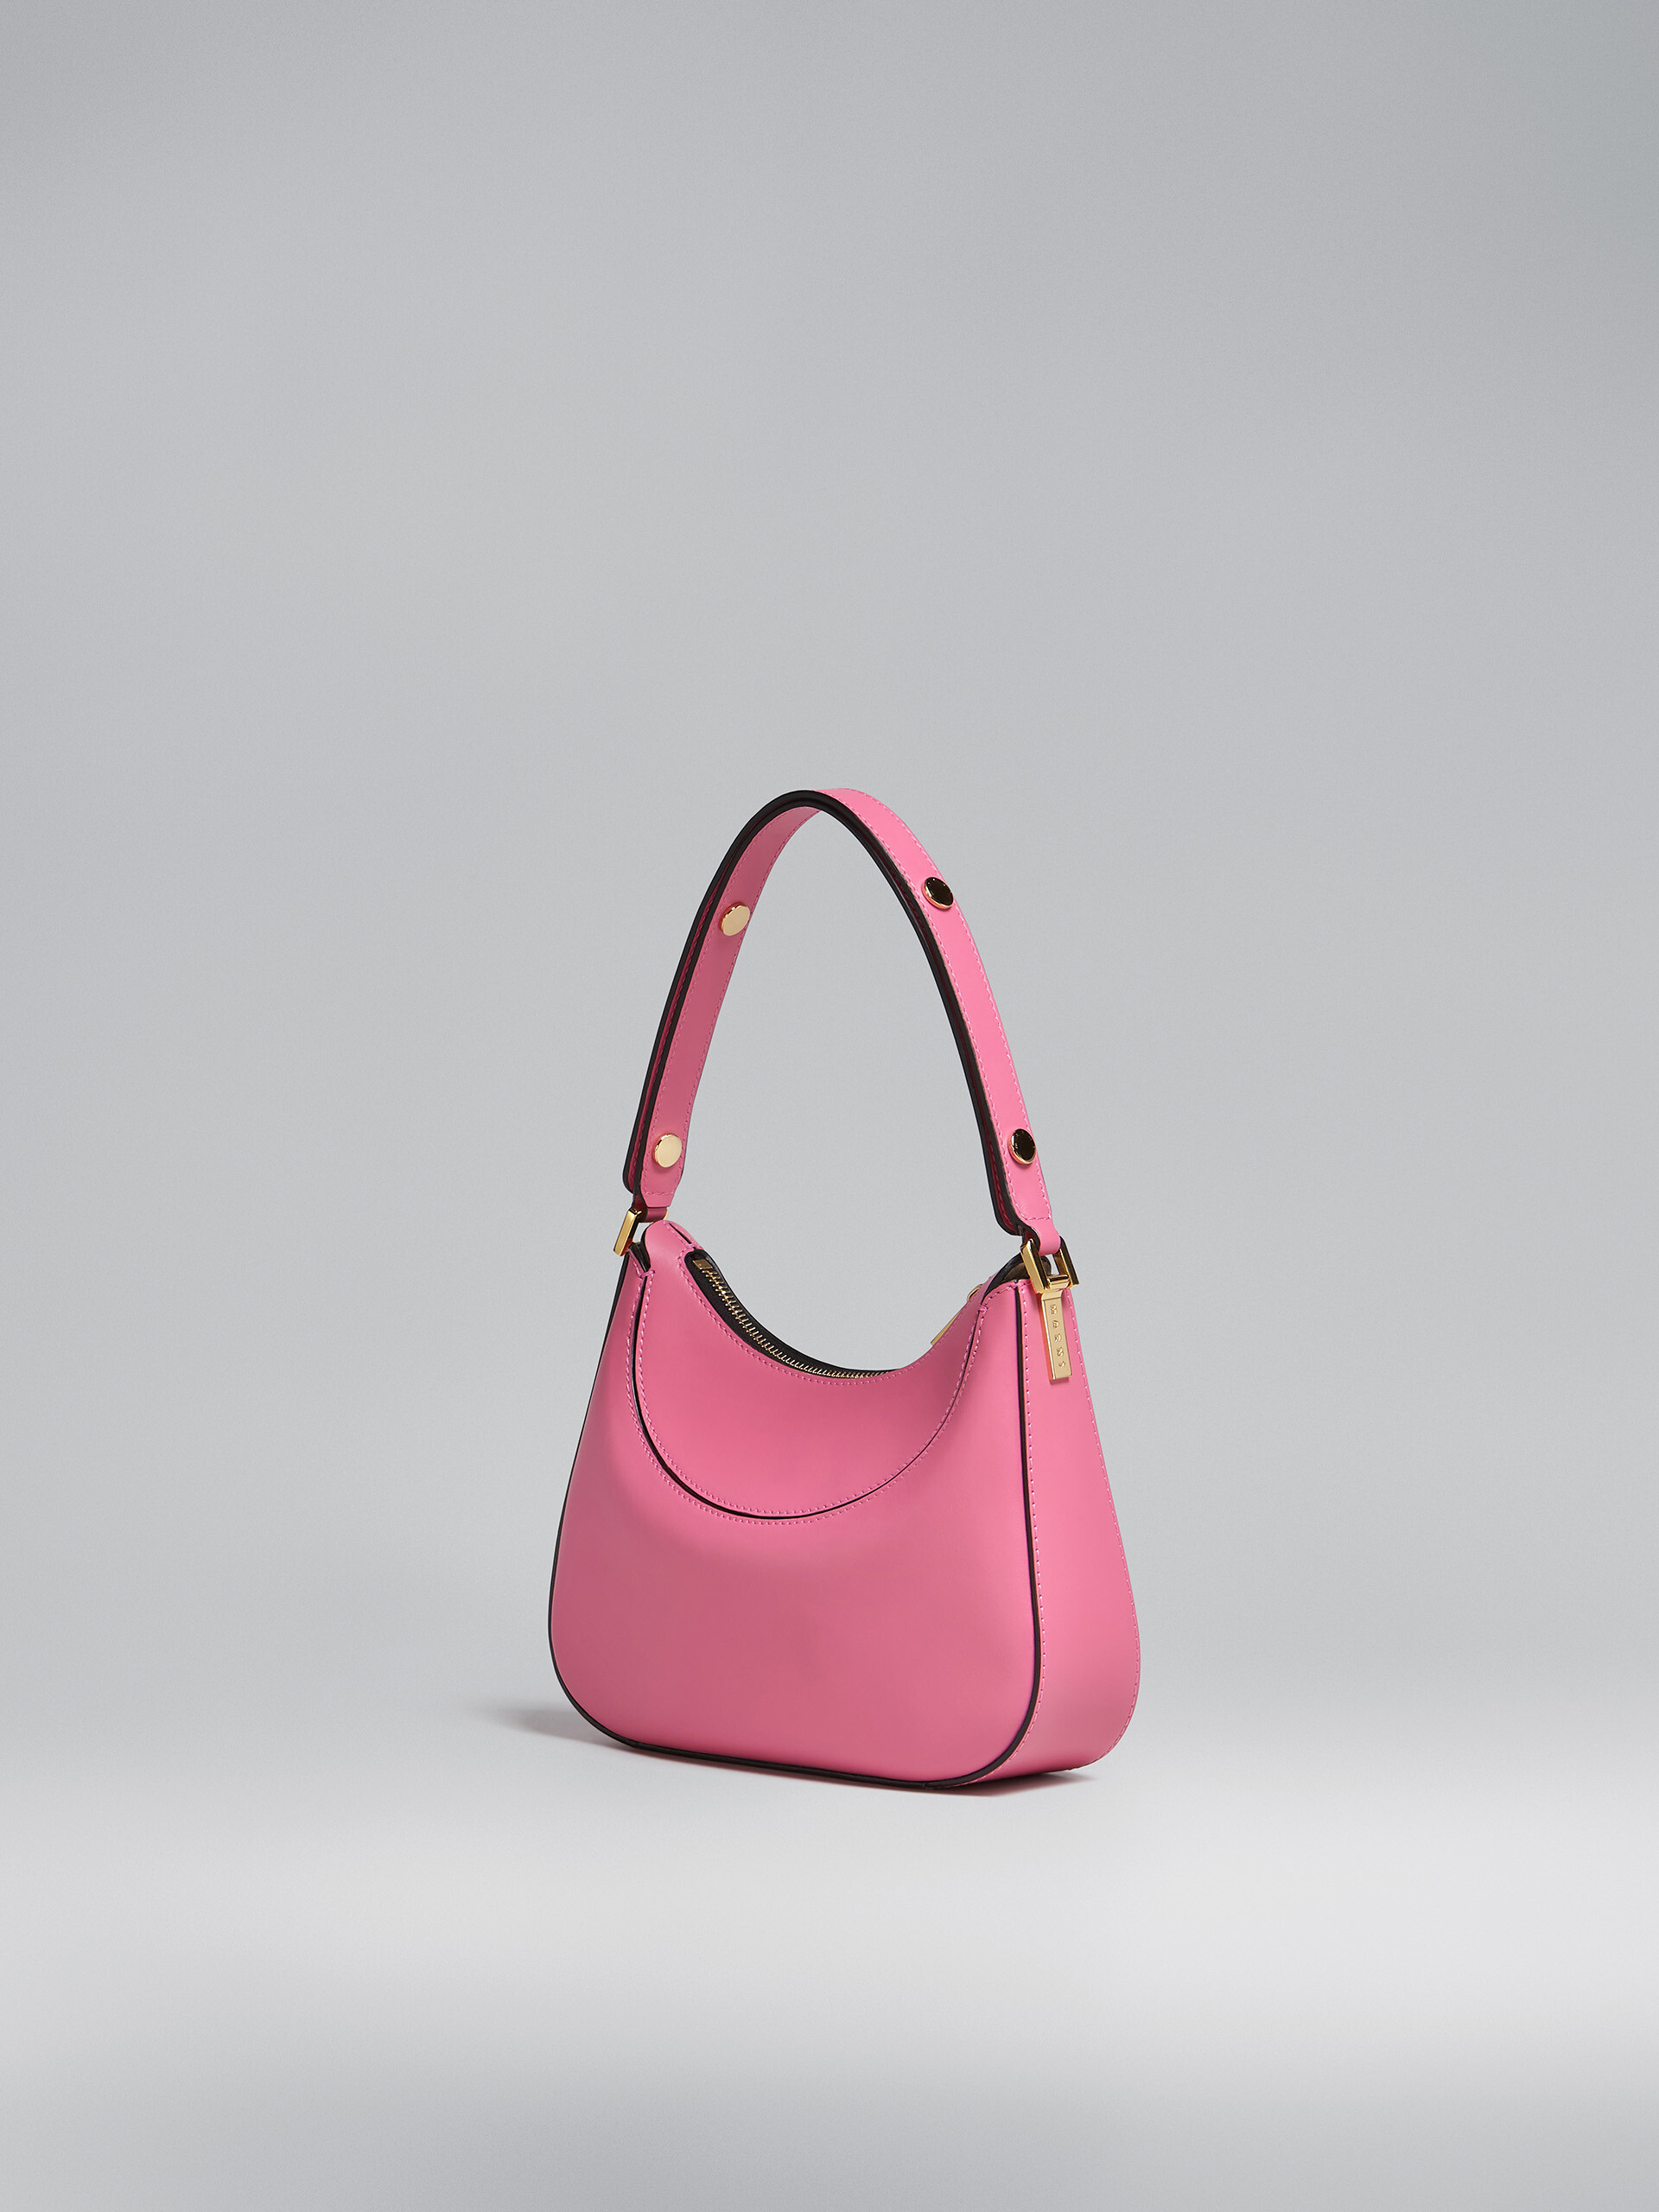 Milano mini bag in pink leather - Handbags - Image 3